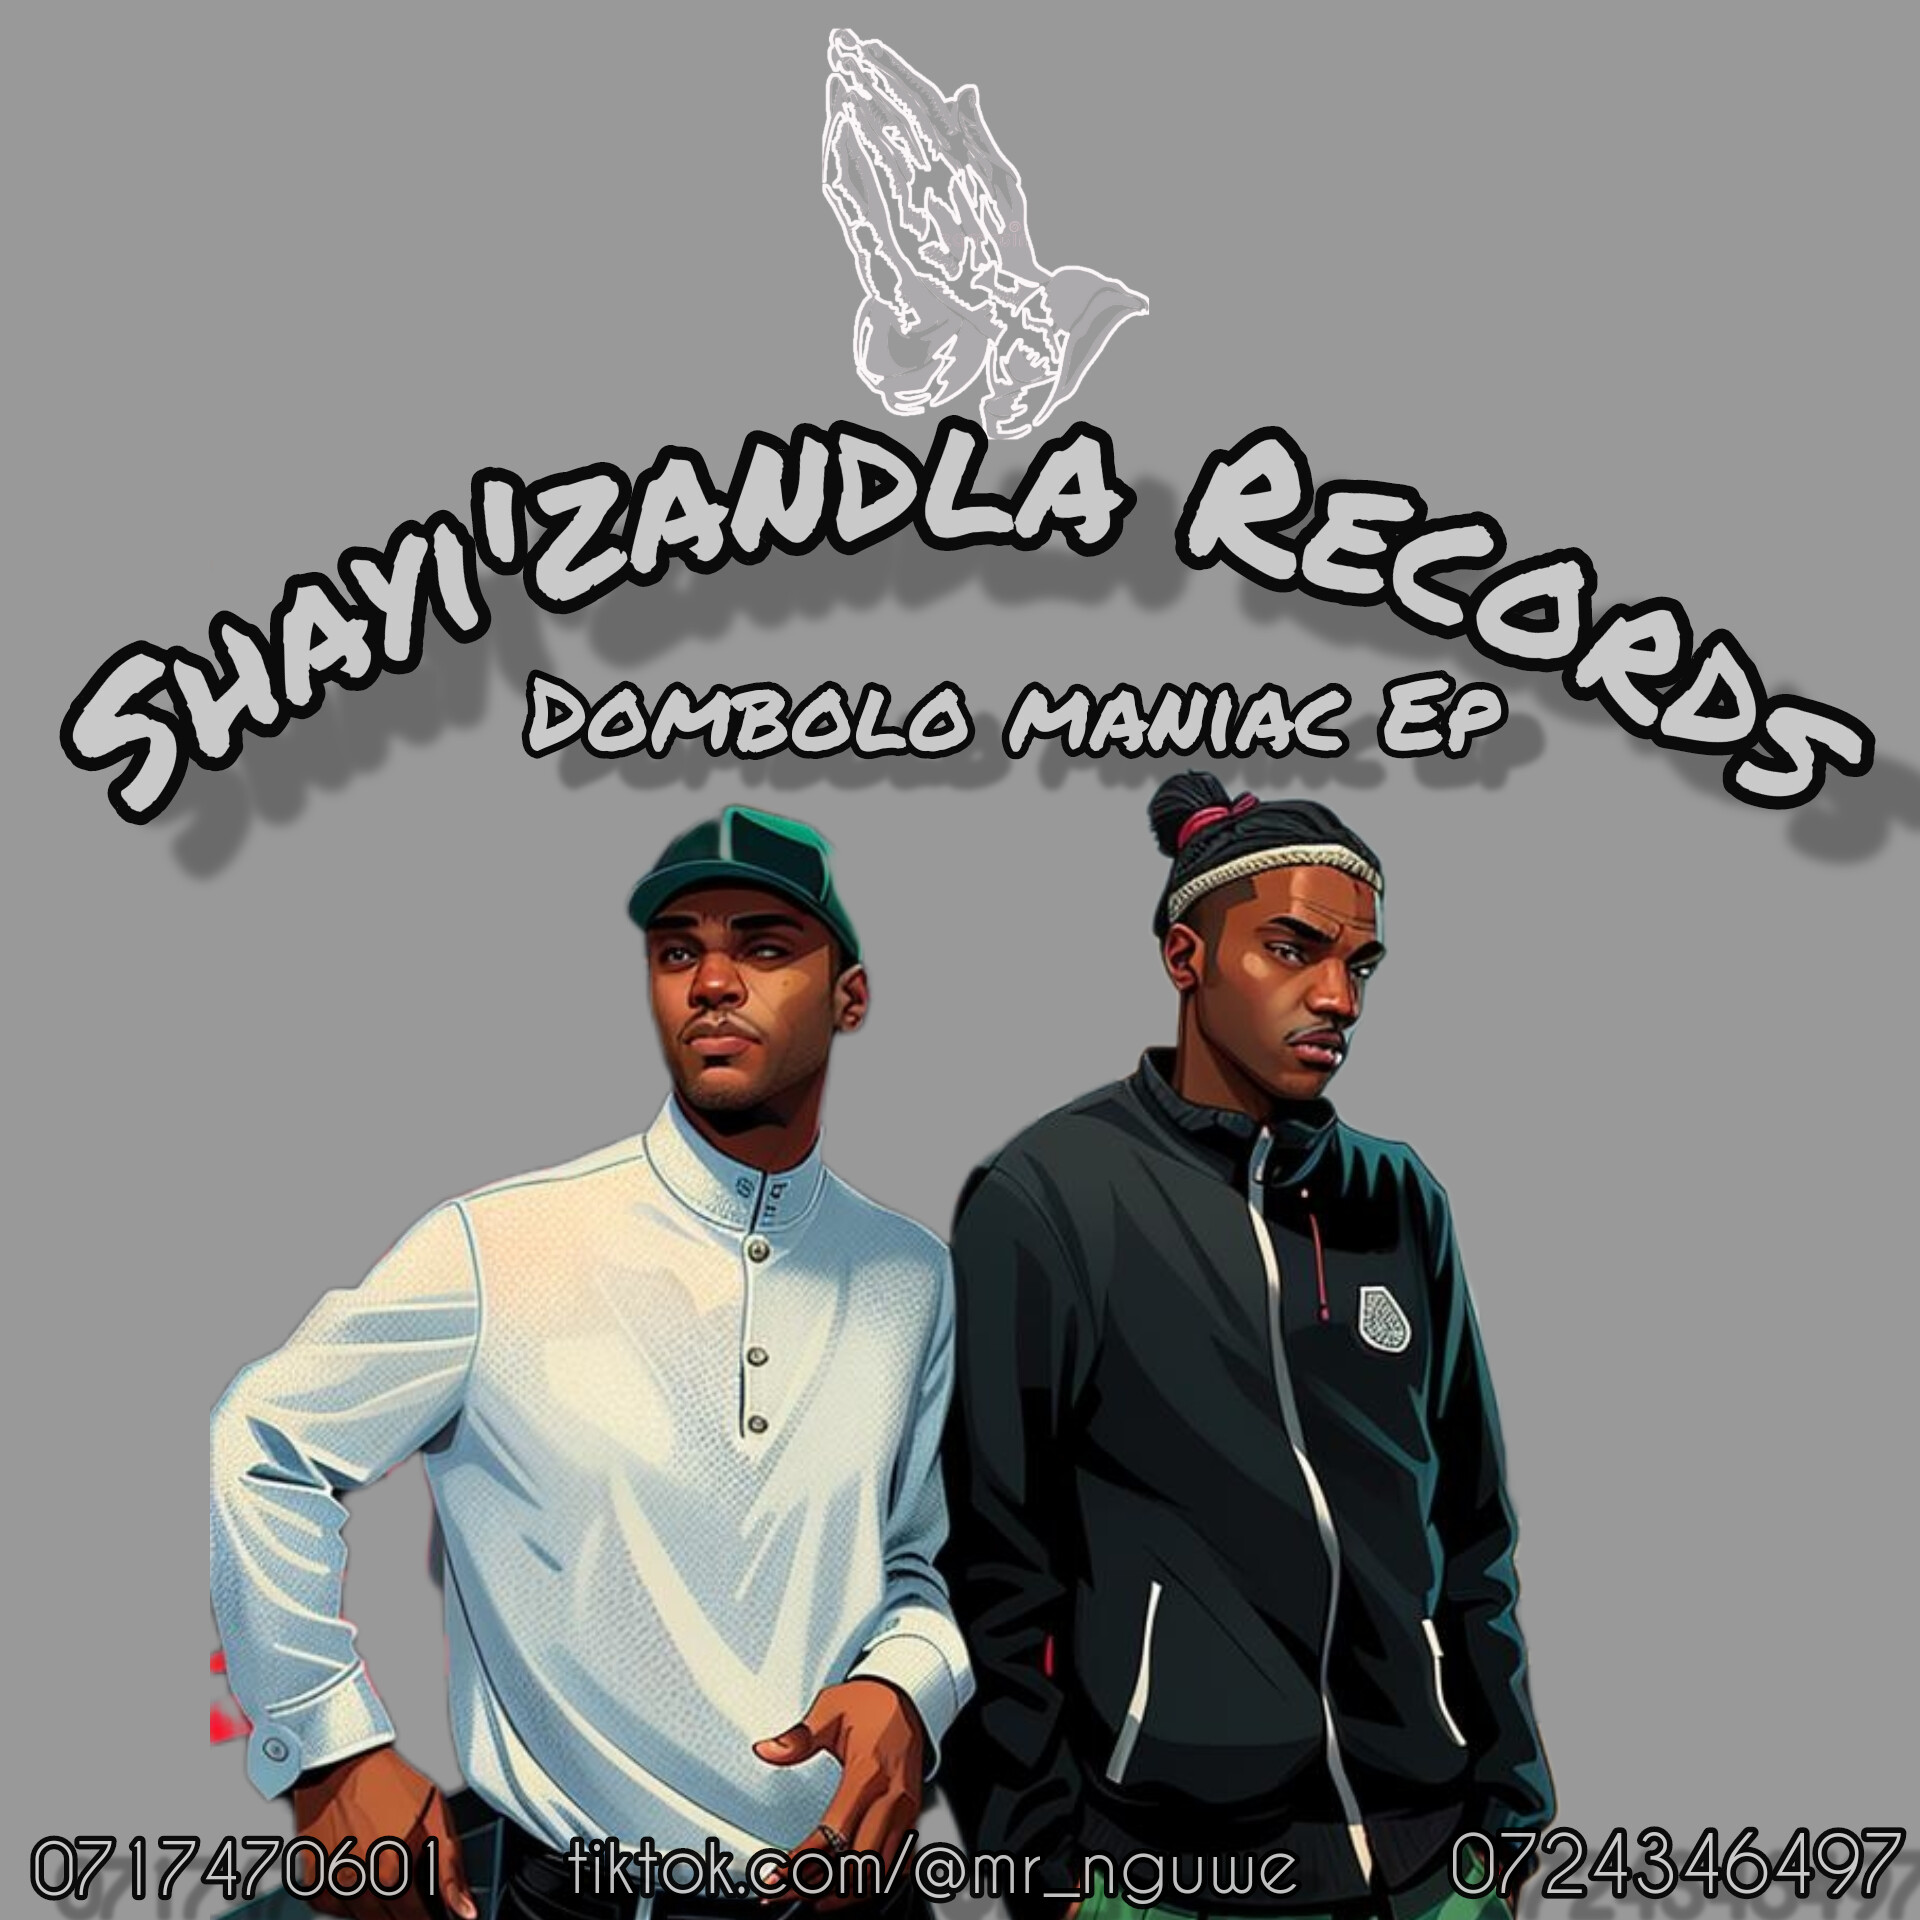 DOMBOLO MANIACS EP. - Shayi'zandla records